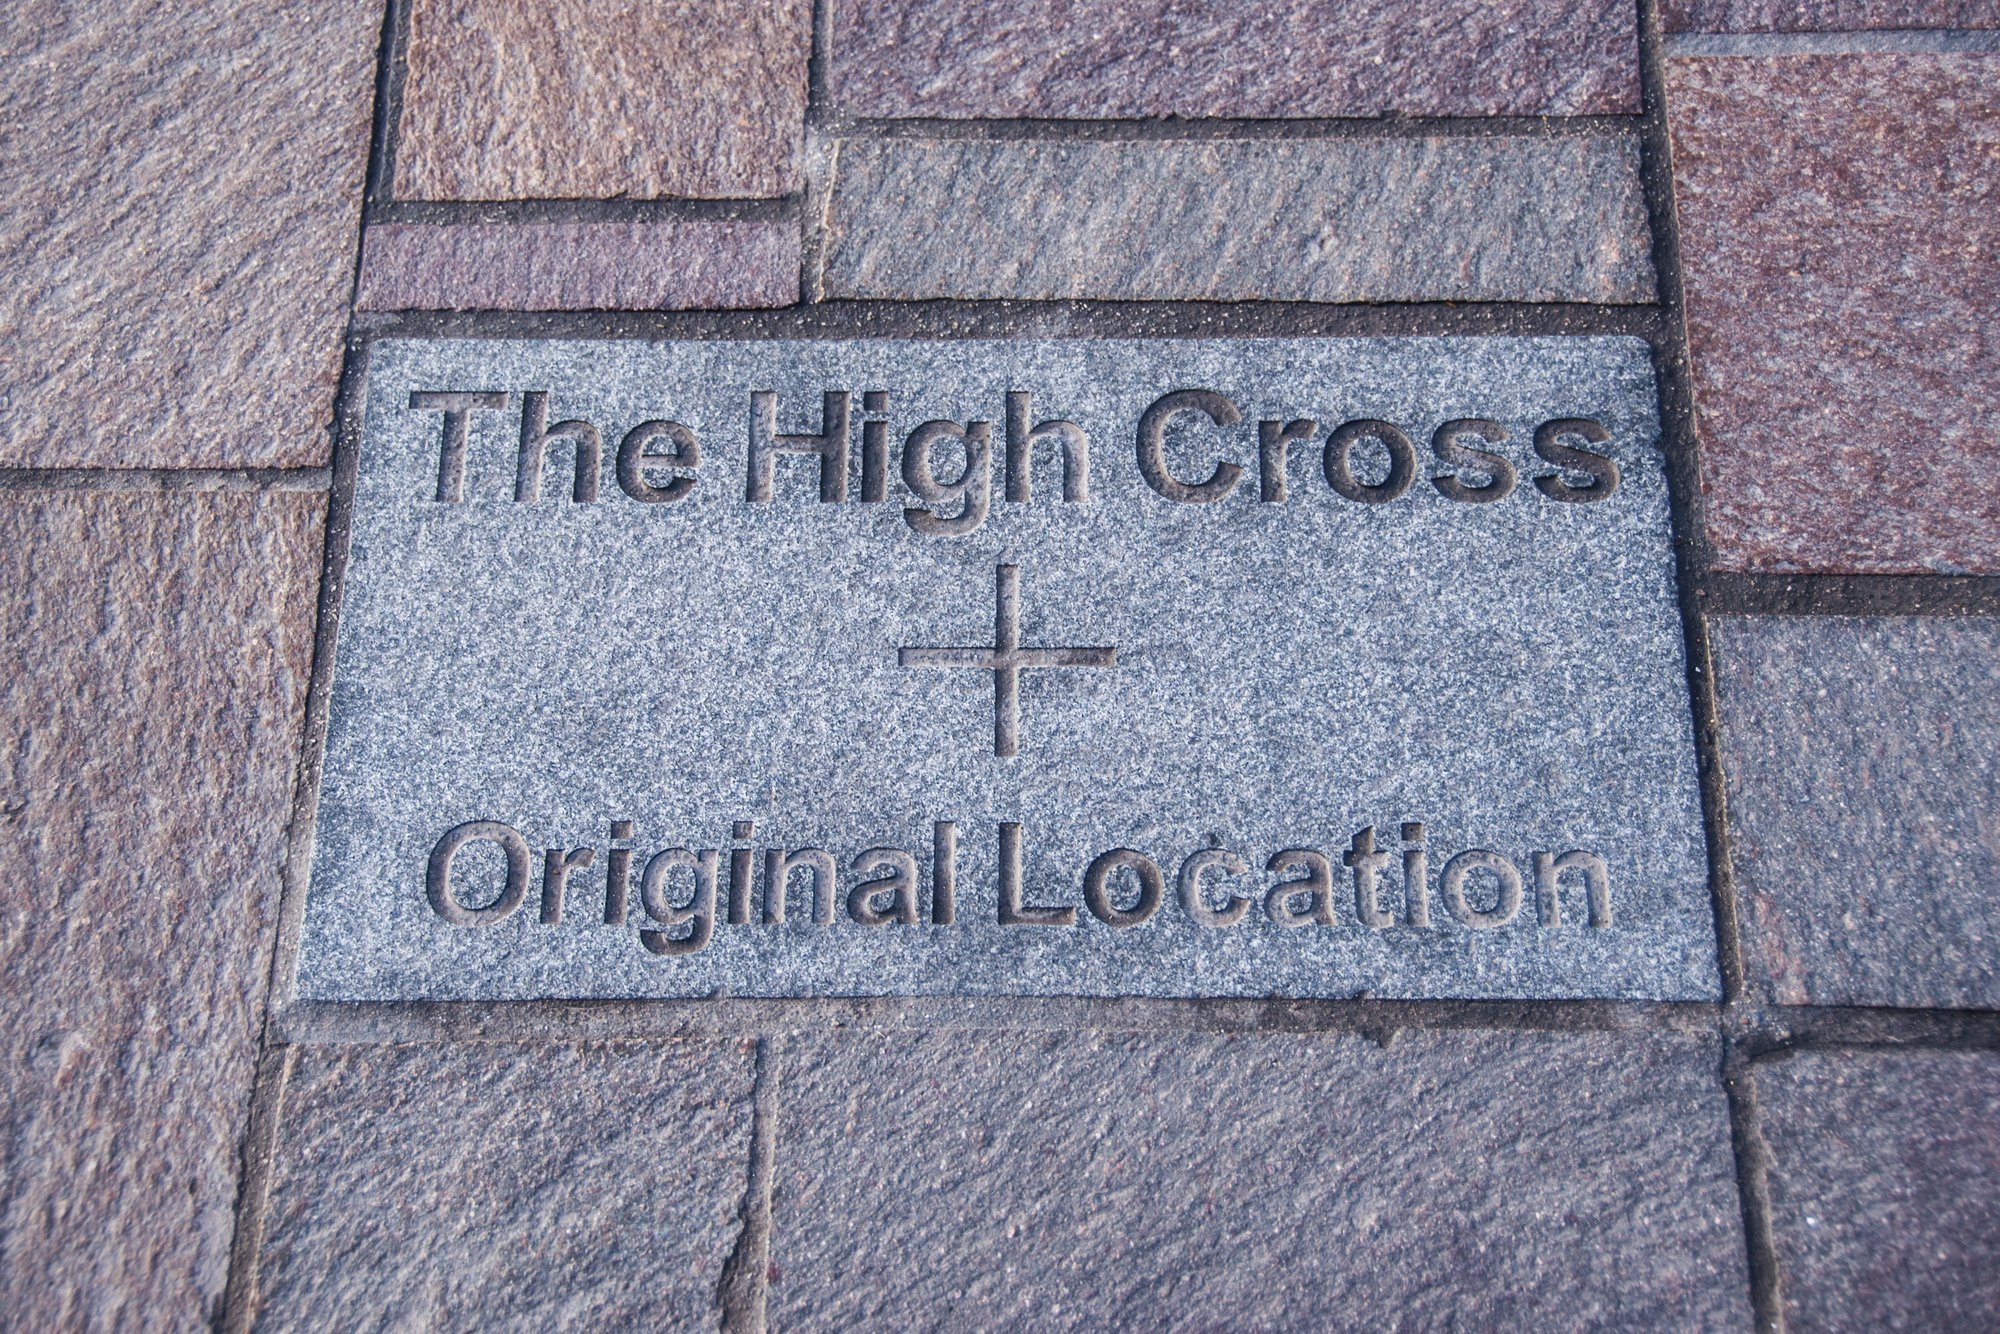 High cross stone